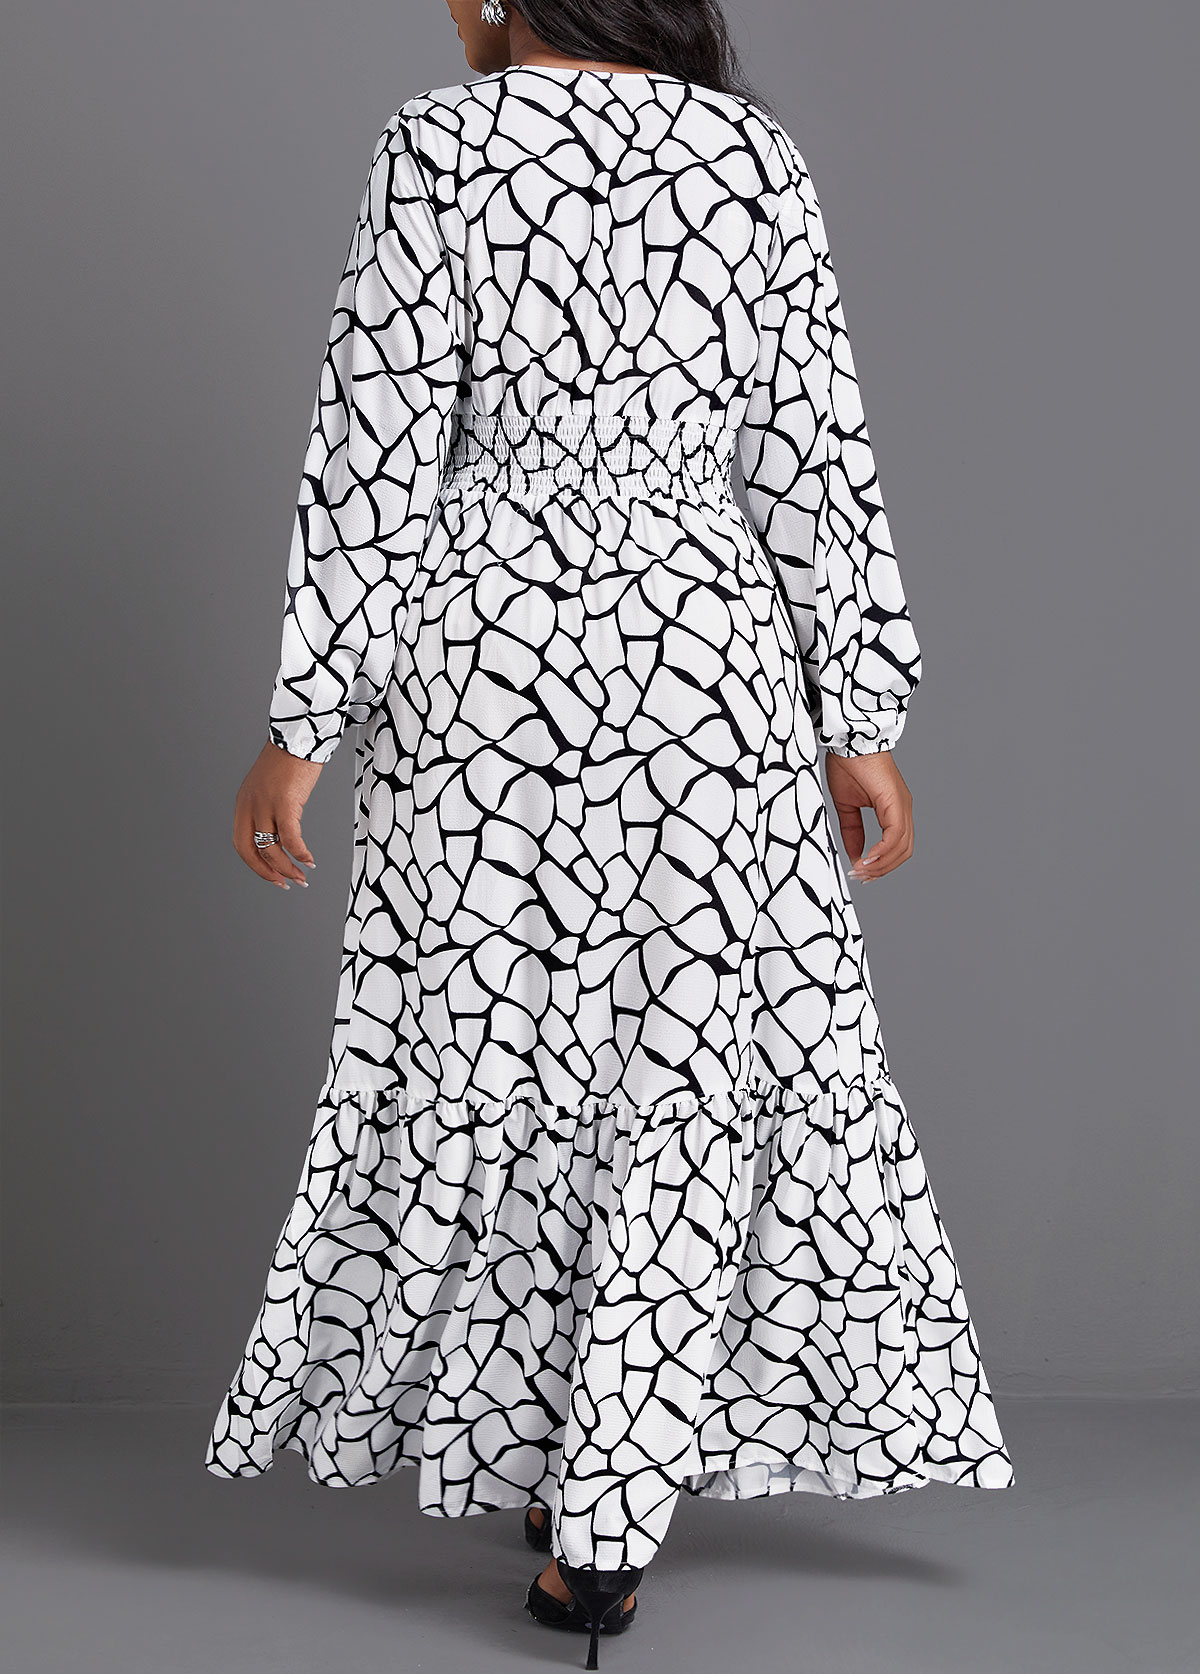 Crocodile Print Smocked White V Neck Dress